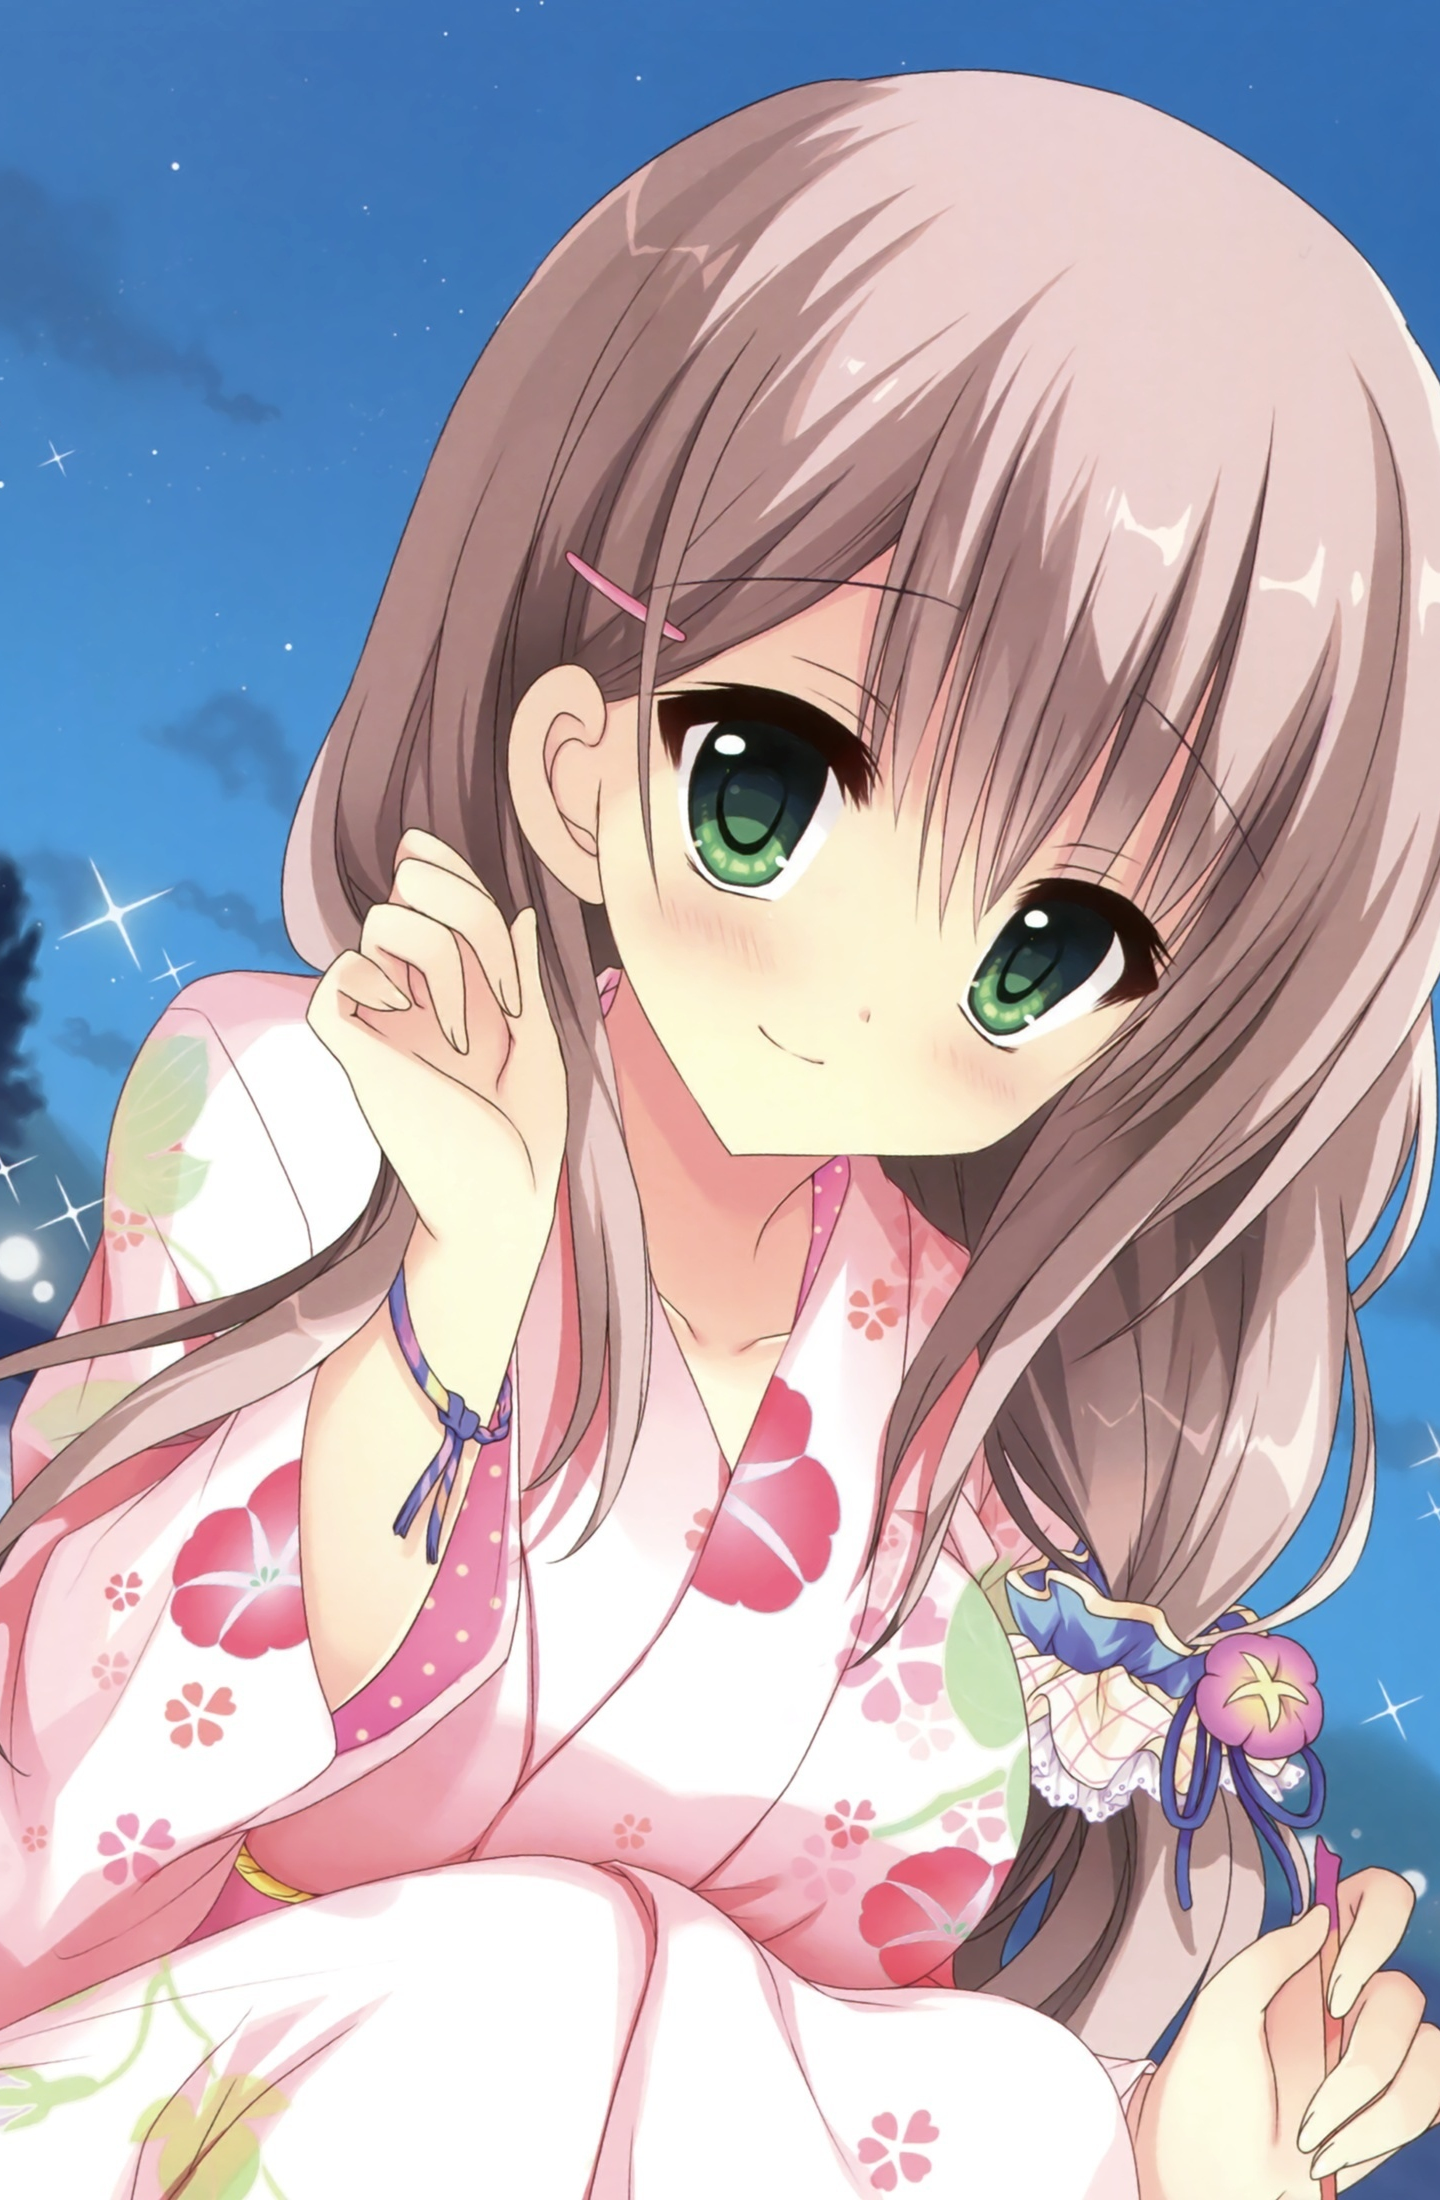 Download wallpaper 1440x2560 cute anime girl, outdoor, green eyes, qhd  samsung galaxy s6, s7, edge, note, lg g4, 1440x2560 hd background, 3880